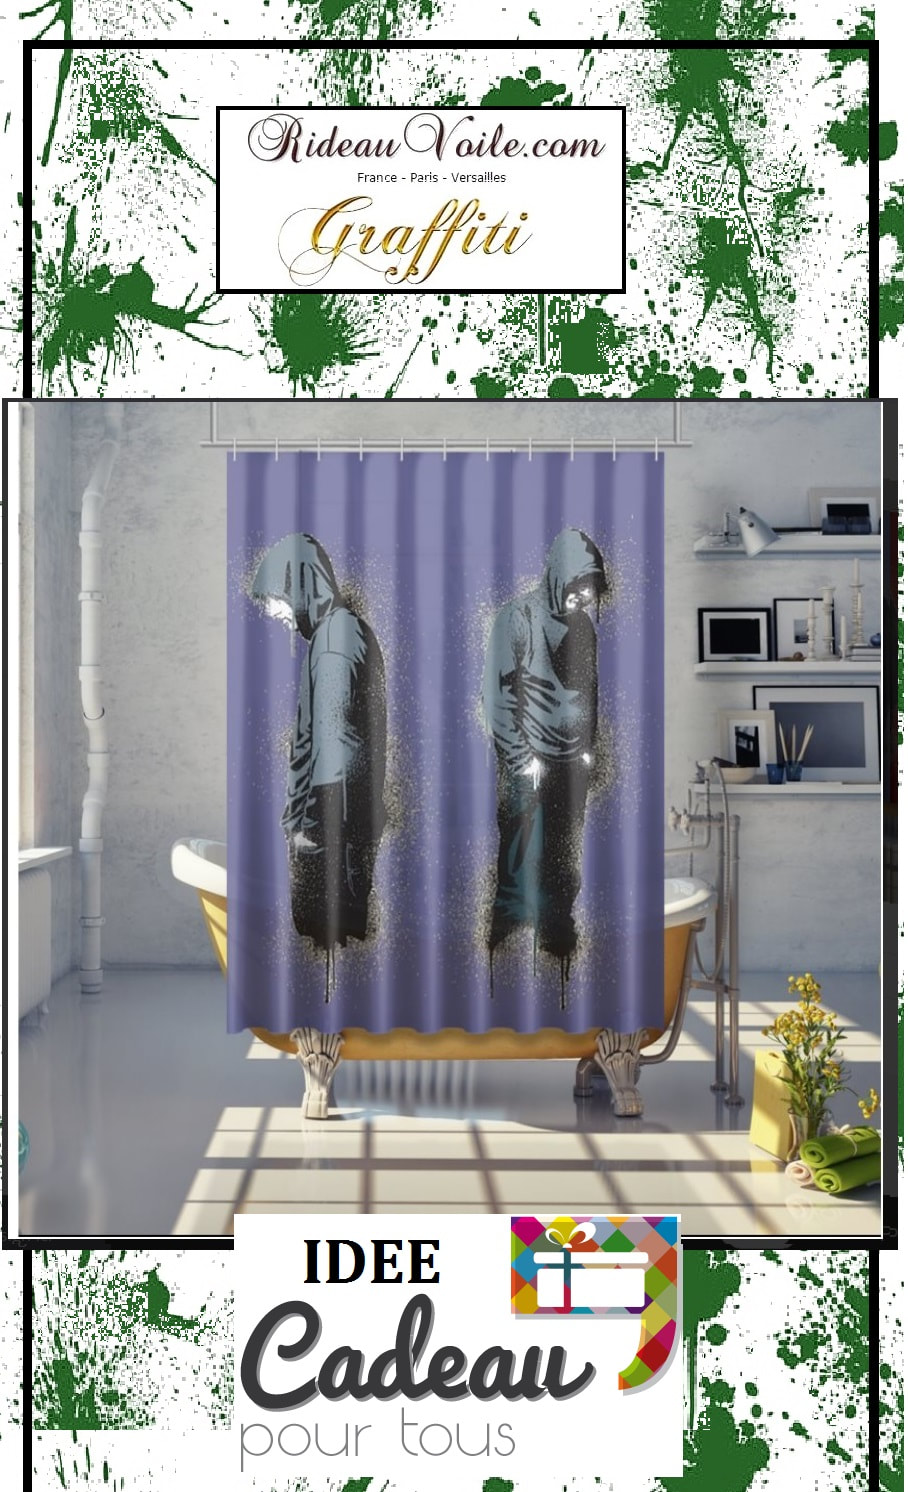 Photo TISSU DÉCORATION AMEUBLEMENT ADO GRAFFITI SKATE MÈTRE RIDEAU COUETTE SUR MESURE#rideau#tissu#graffiti#motif#mètre#fabrics#meter#decor#drapes#curtain#duvet#cover#vorhang#tenda#stof#